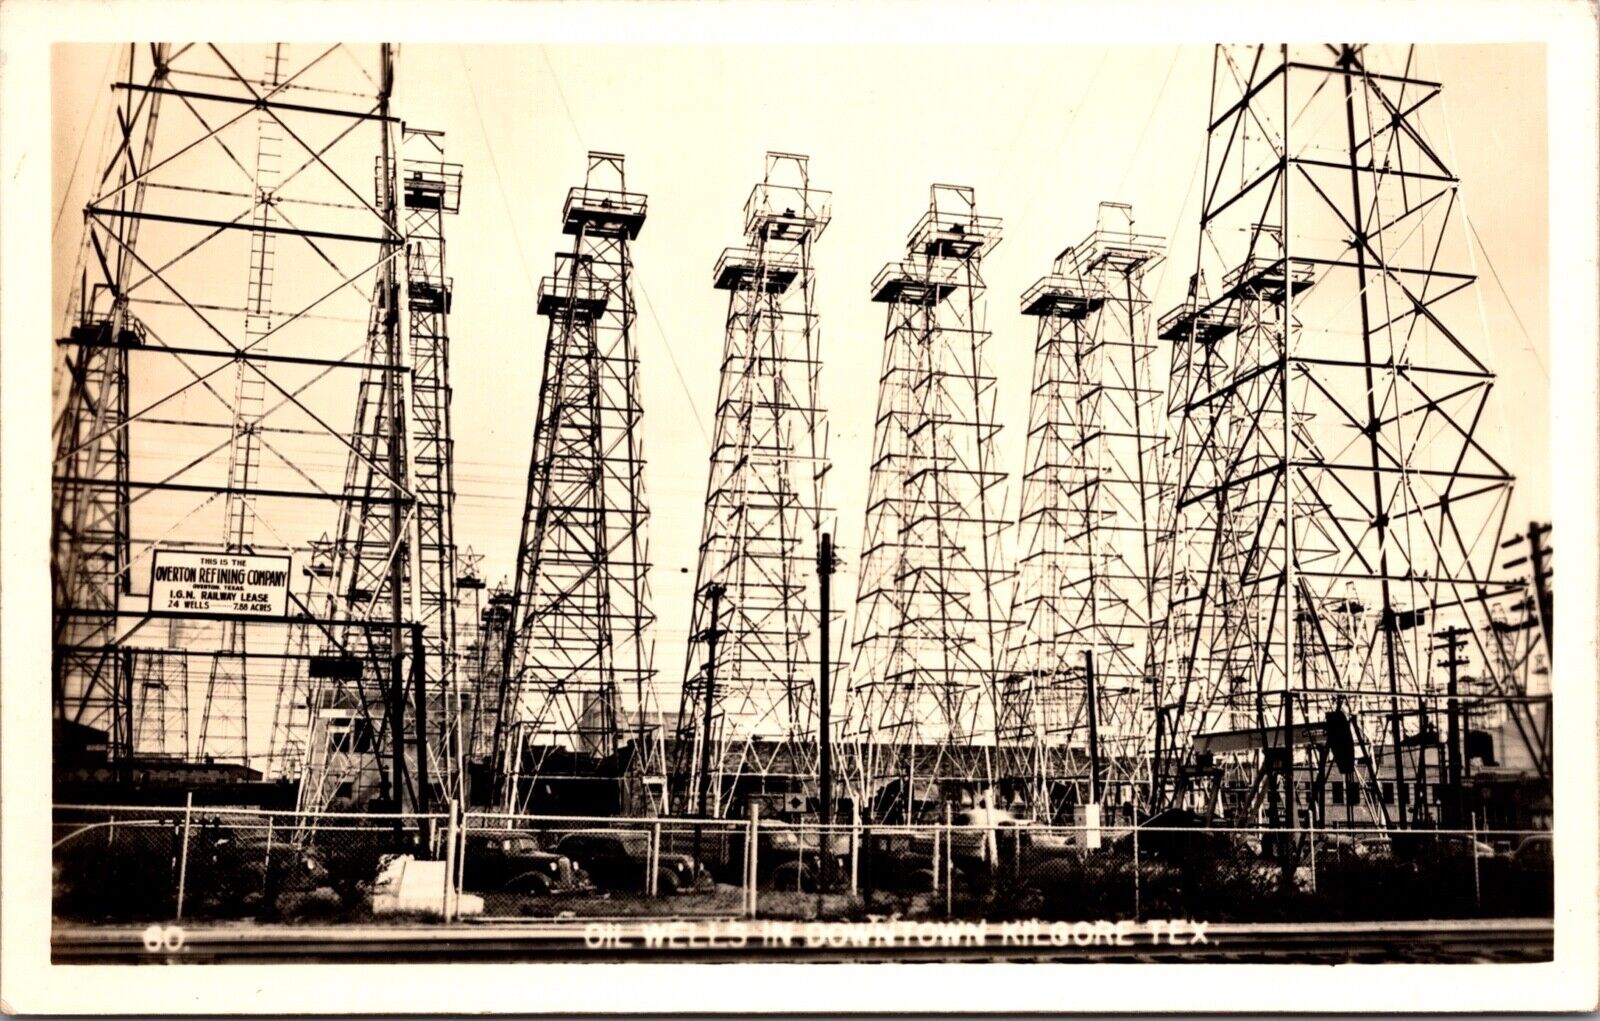 Real Photo Postcard Oil Wells in Downtown Kilgore, Texas